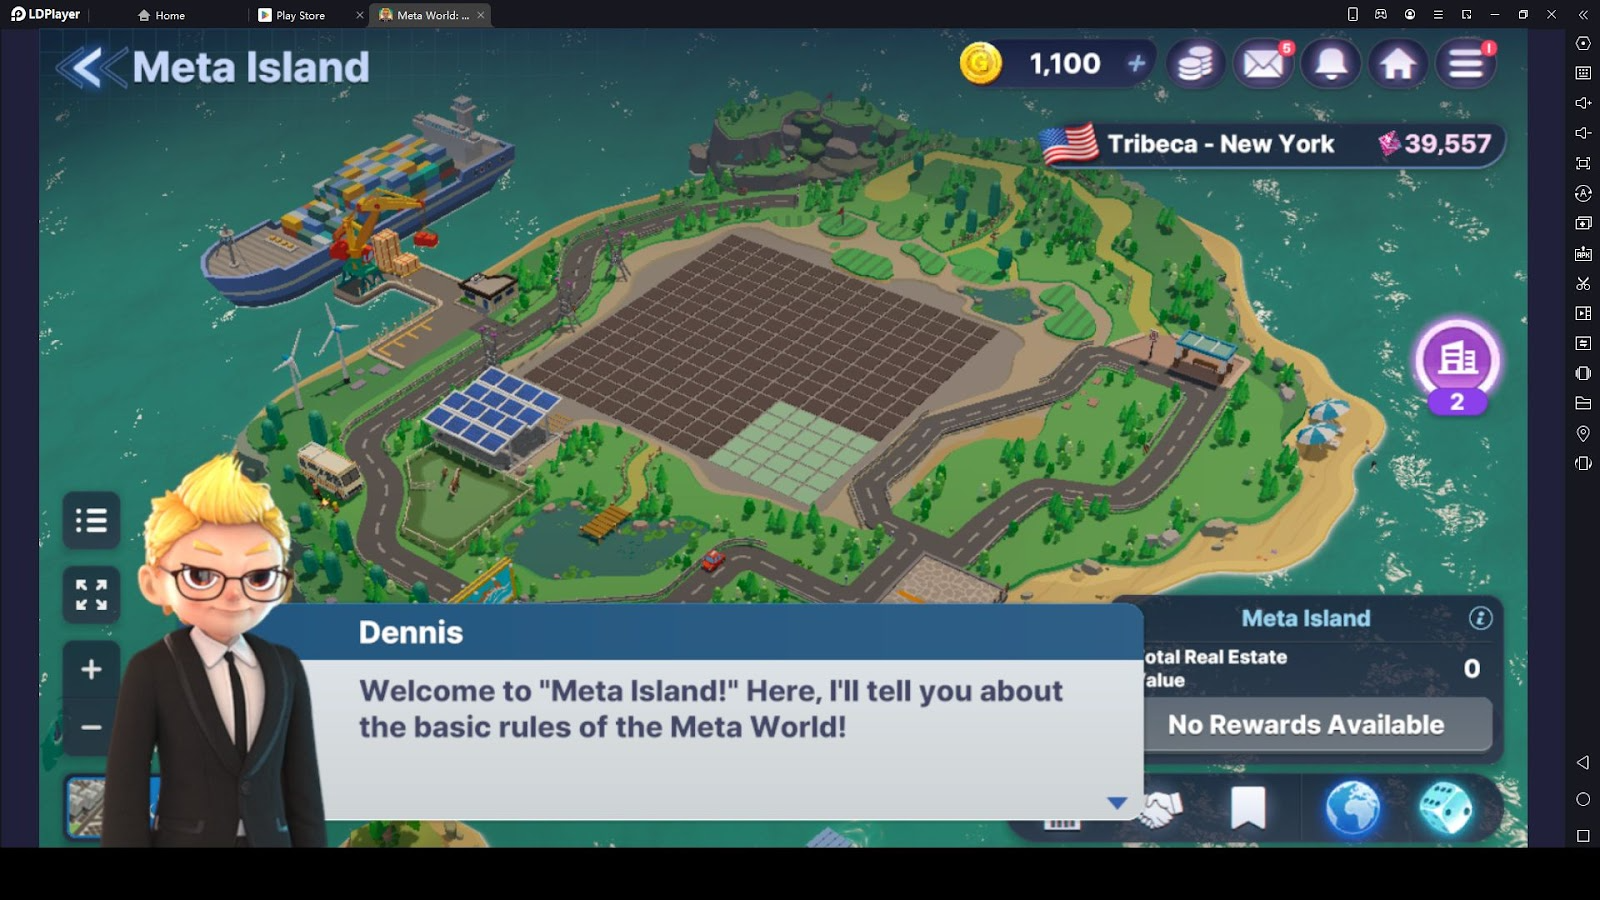 The Meta Islands